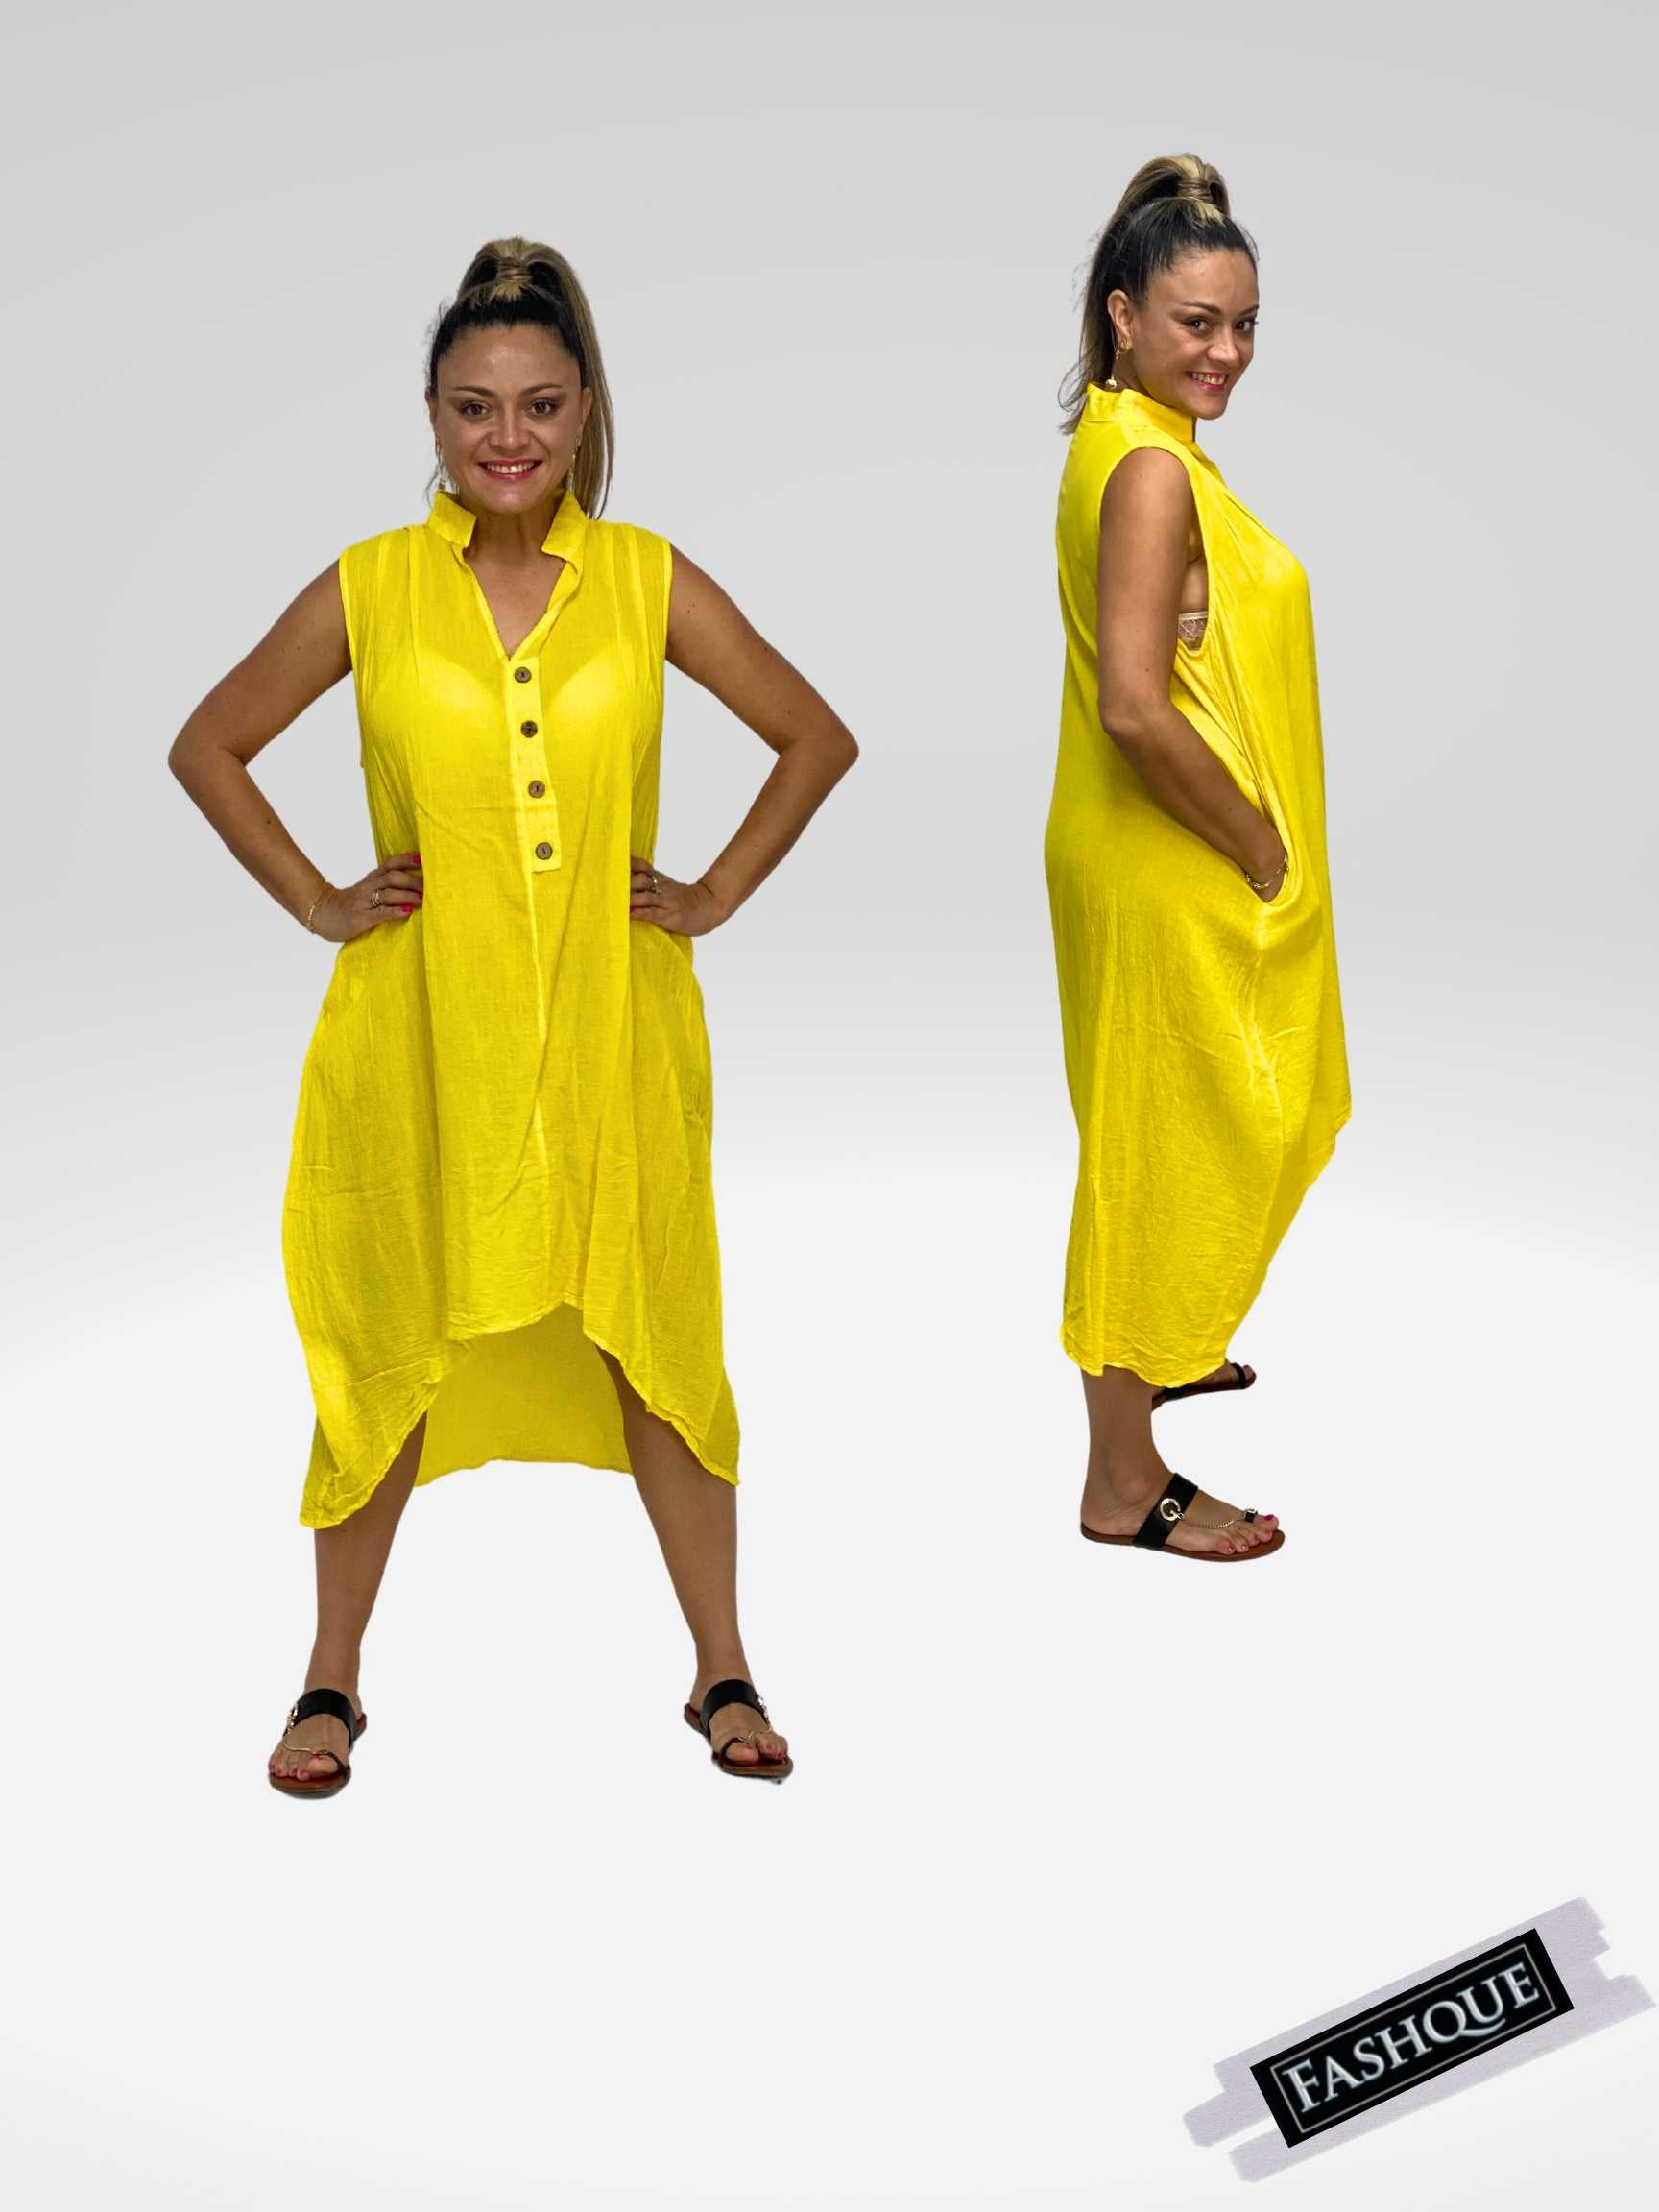 FASHQUE - Dress come Bikini Bathing Suit Beach Cover Ups shirt with Pockets - D6249